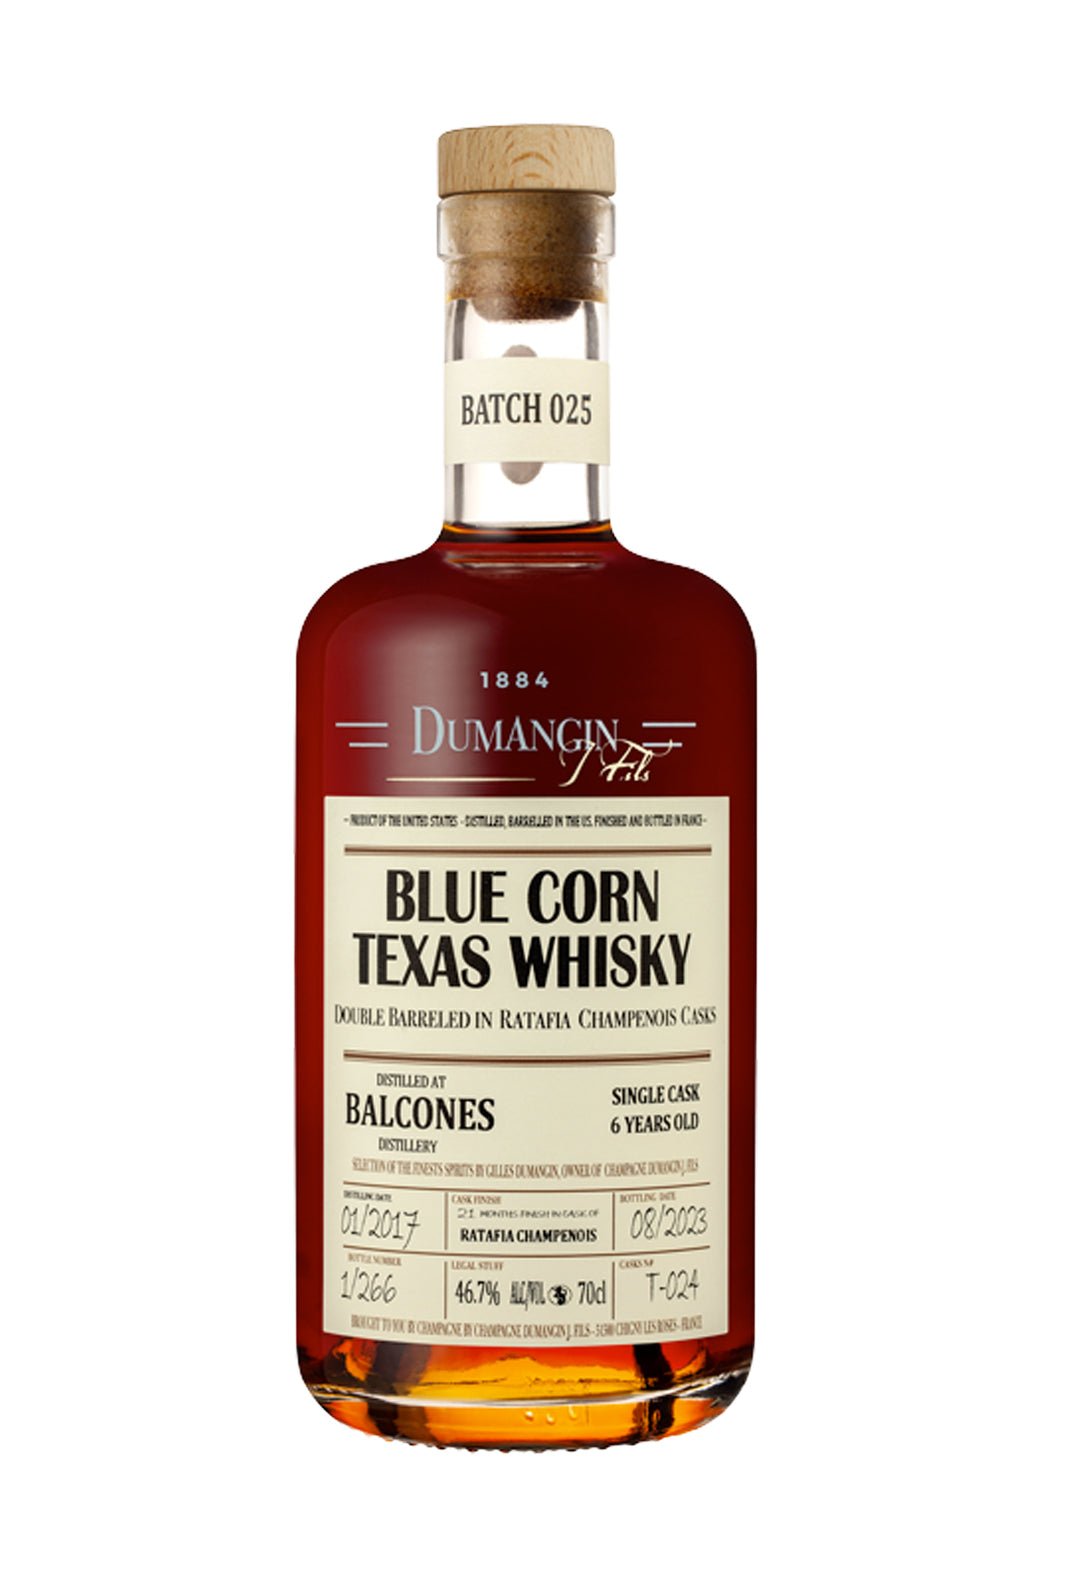 Dumangin 025 Blue Corn Balcones Texas Whisky 46.7% 700ml | Whisky | Shop online at Spirits of France